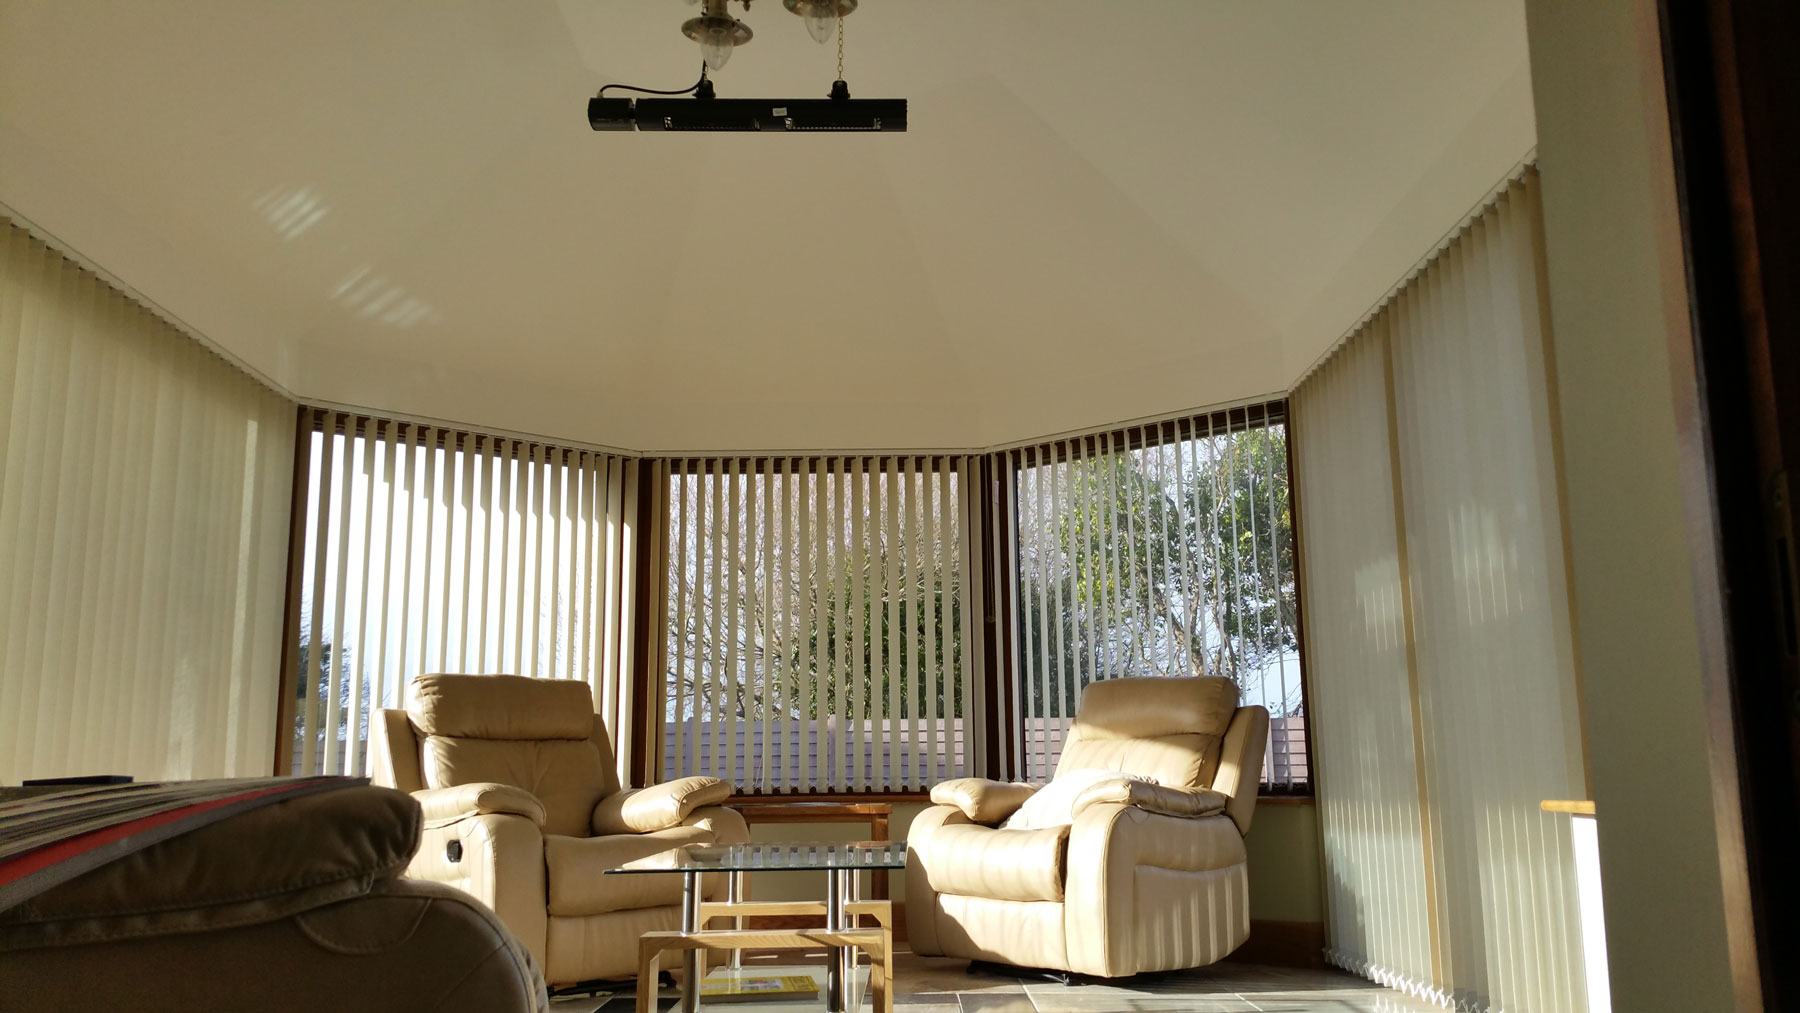 Tansun Eclipse No Glare Ceramic Infrared Heater On Ceiling Of Indoor Living Room